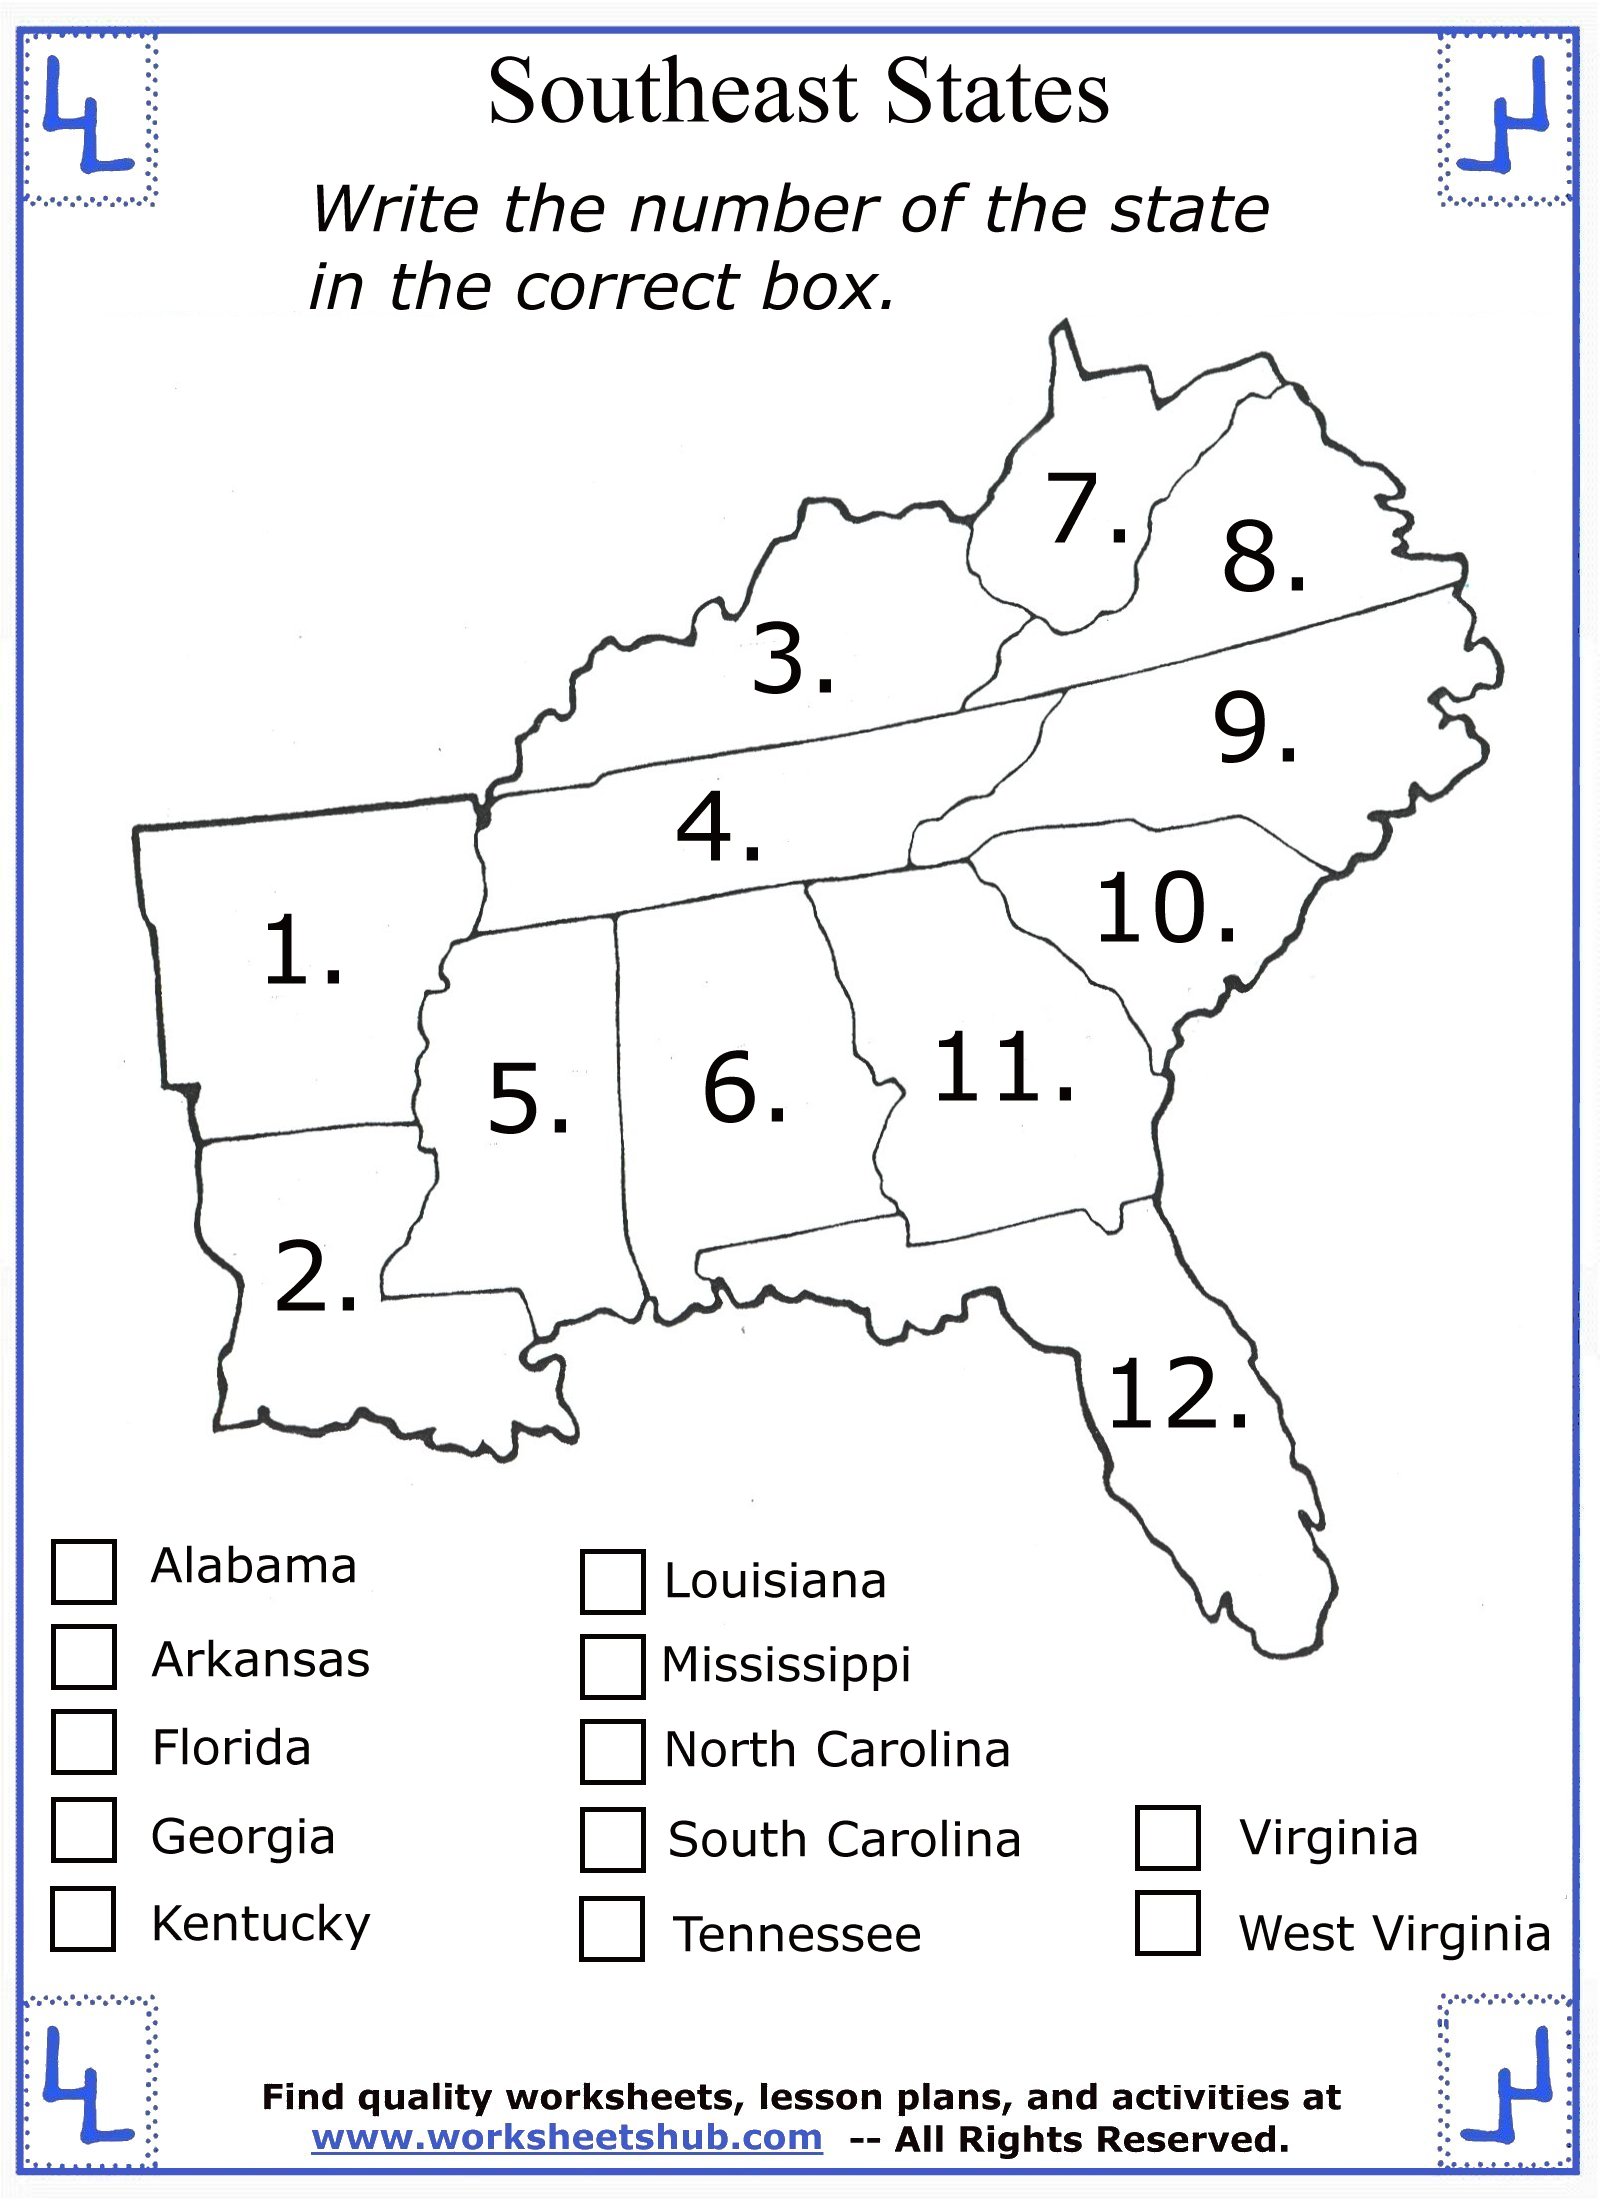 11th Grade Social Studies - Southeast Region States With Regard To Second Grade Social Studies Worksheet